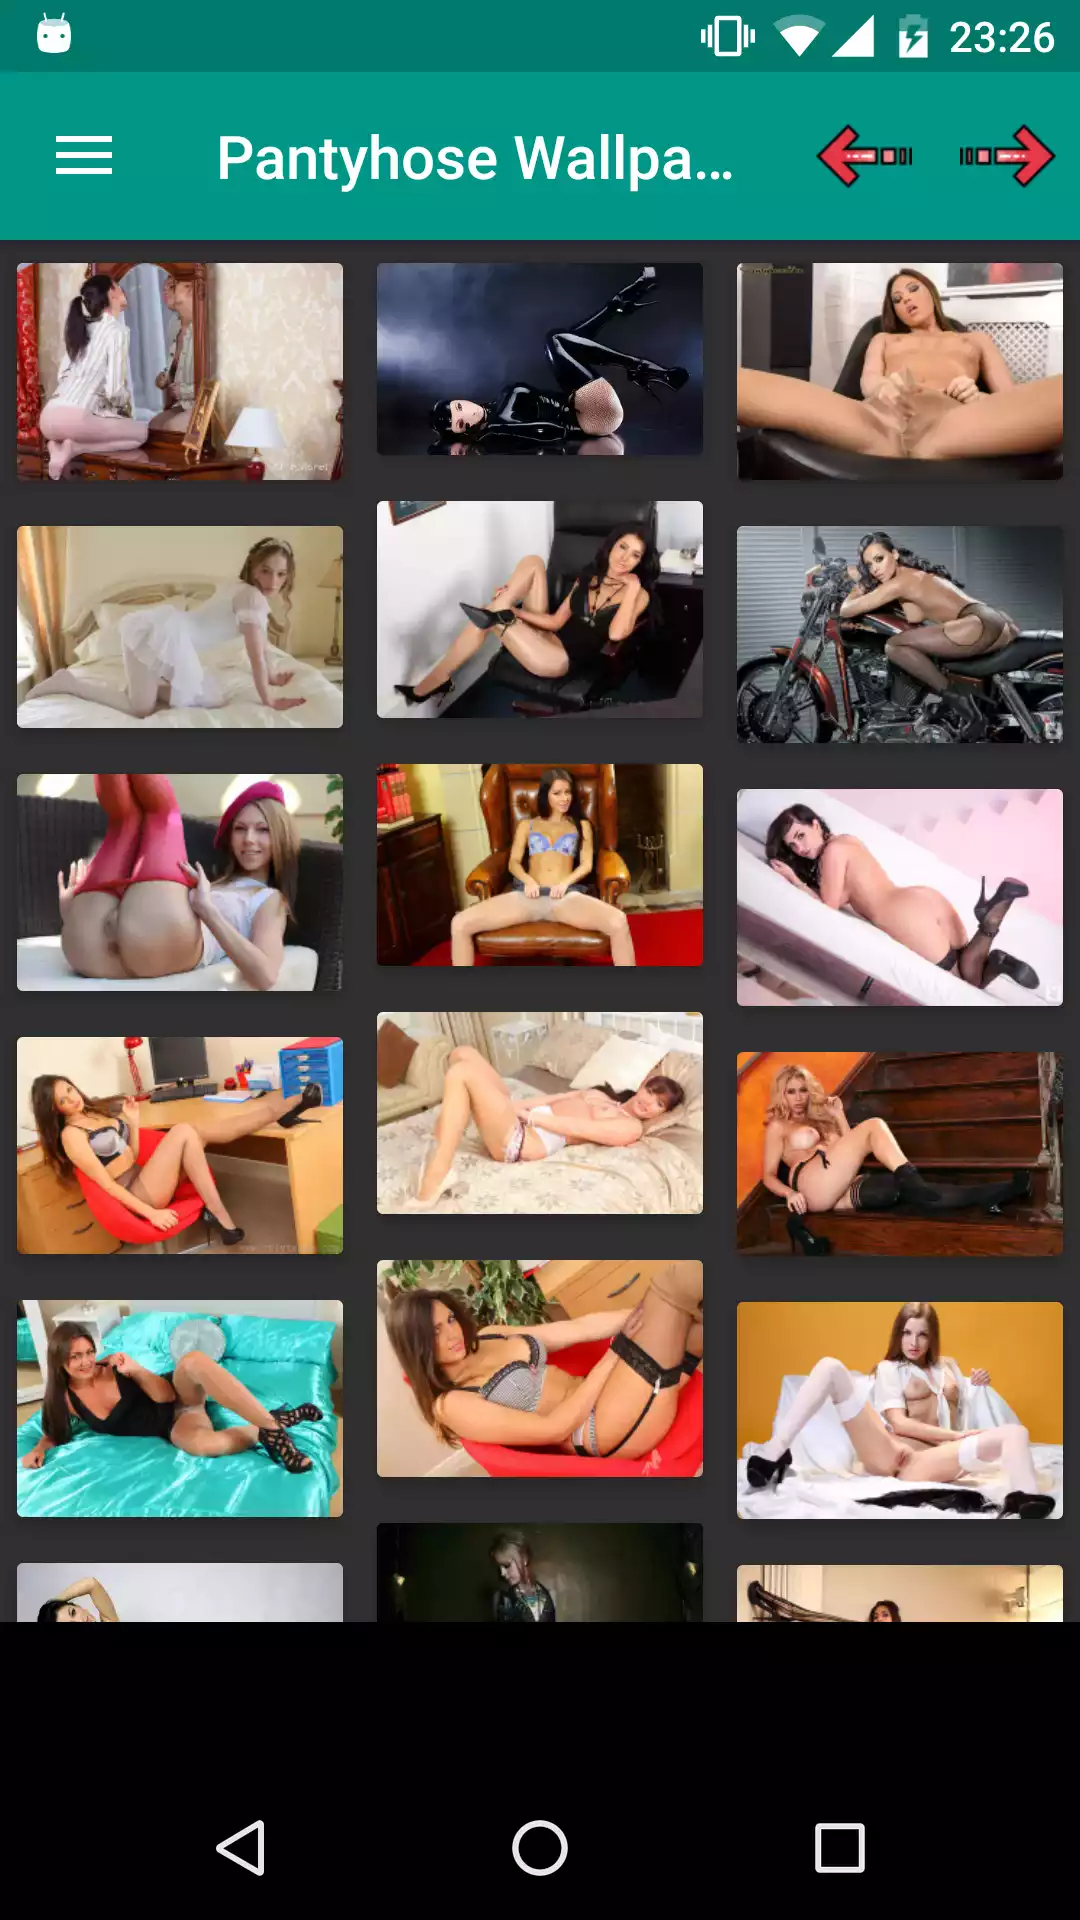 Pantyhouse backgrounds wallpaper,apps,anime,apk,erotic,chicks,best,immage,henti,pornstars,nylon,fetish,pic,app,panties,image,wallpapers,amateur,pantyhouse,offline,pics,photos,dicks,porn,with,hentai,manga,gallery,henta,sexy,comics,photo